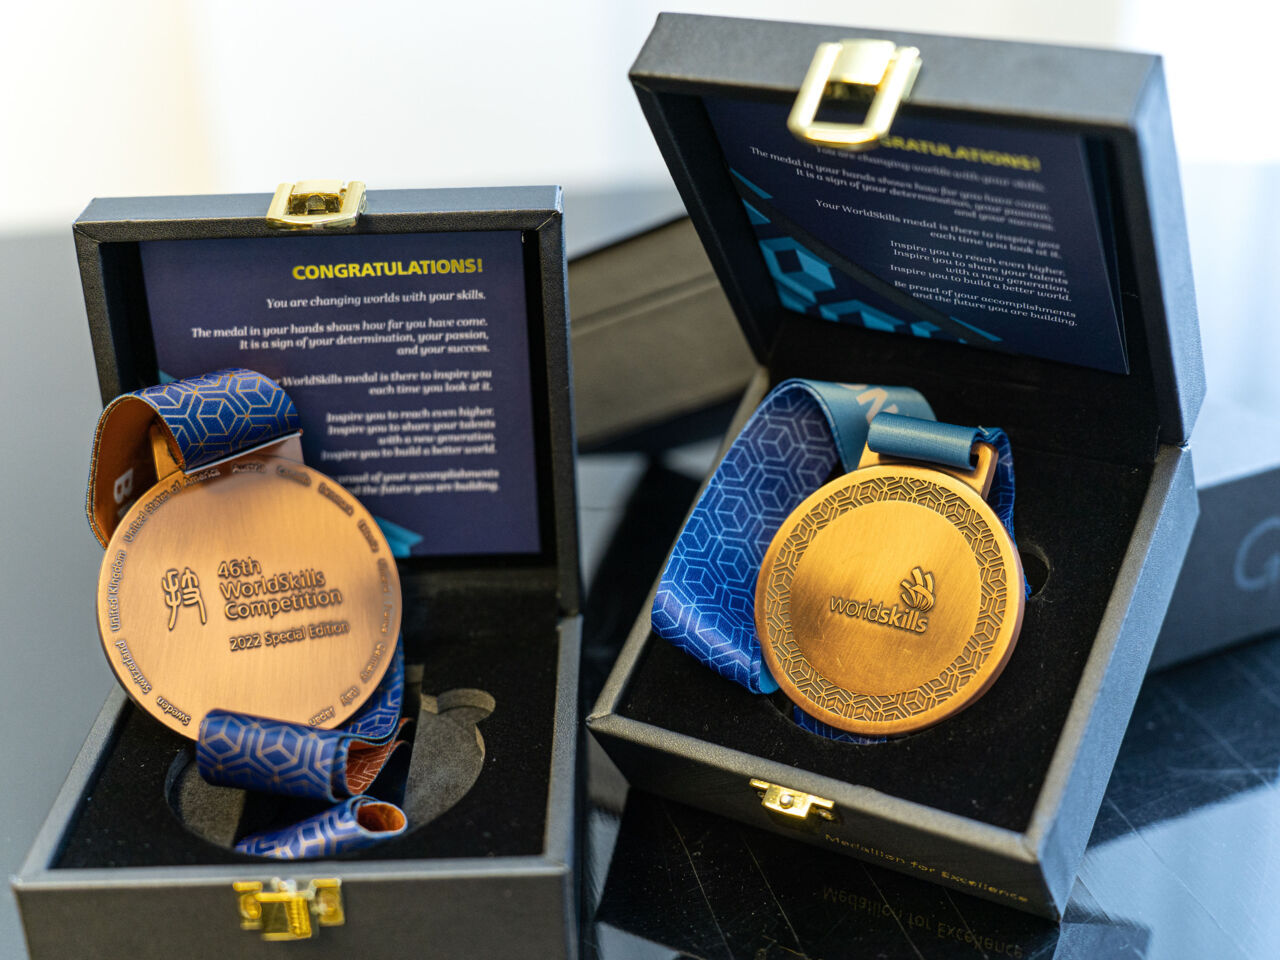 A Championdesigned WorldSkills medal